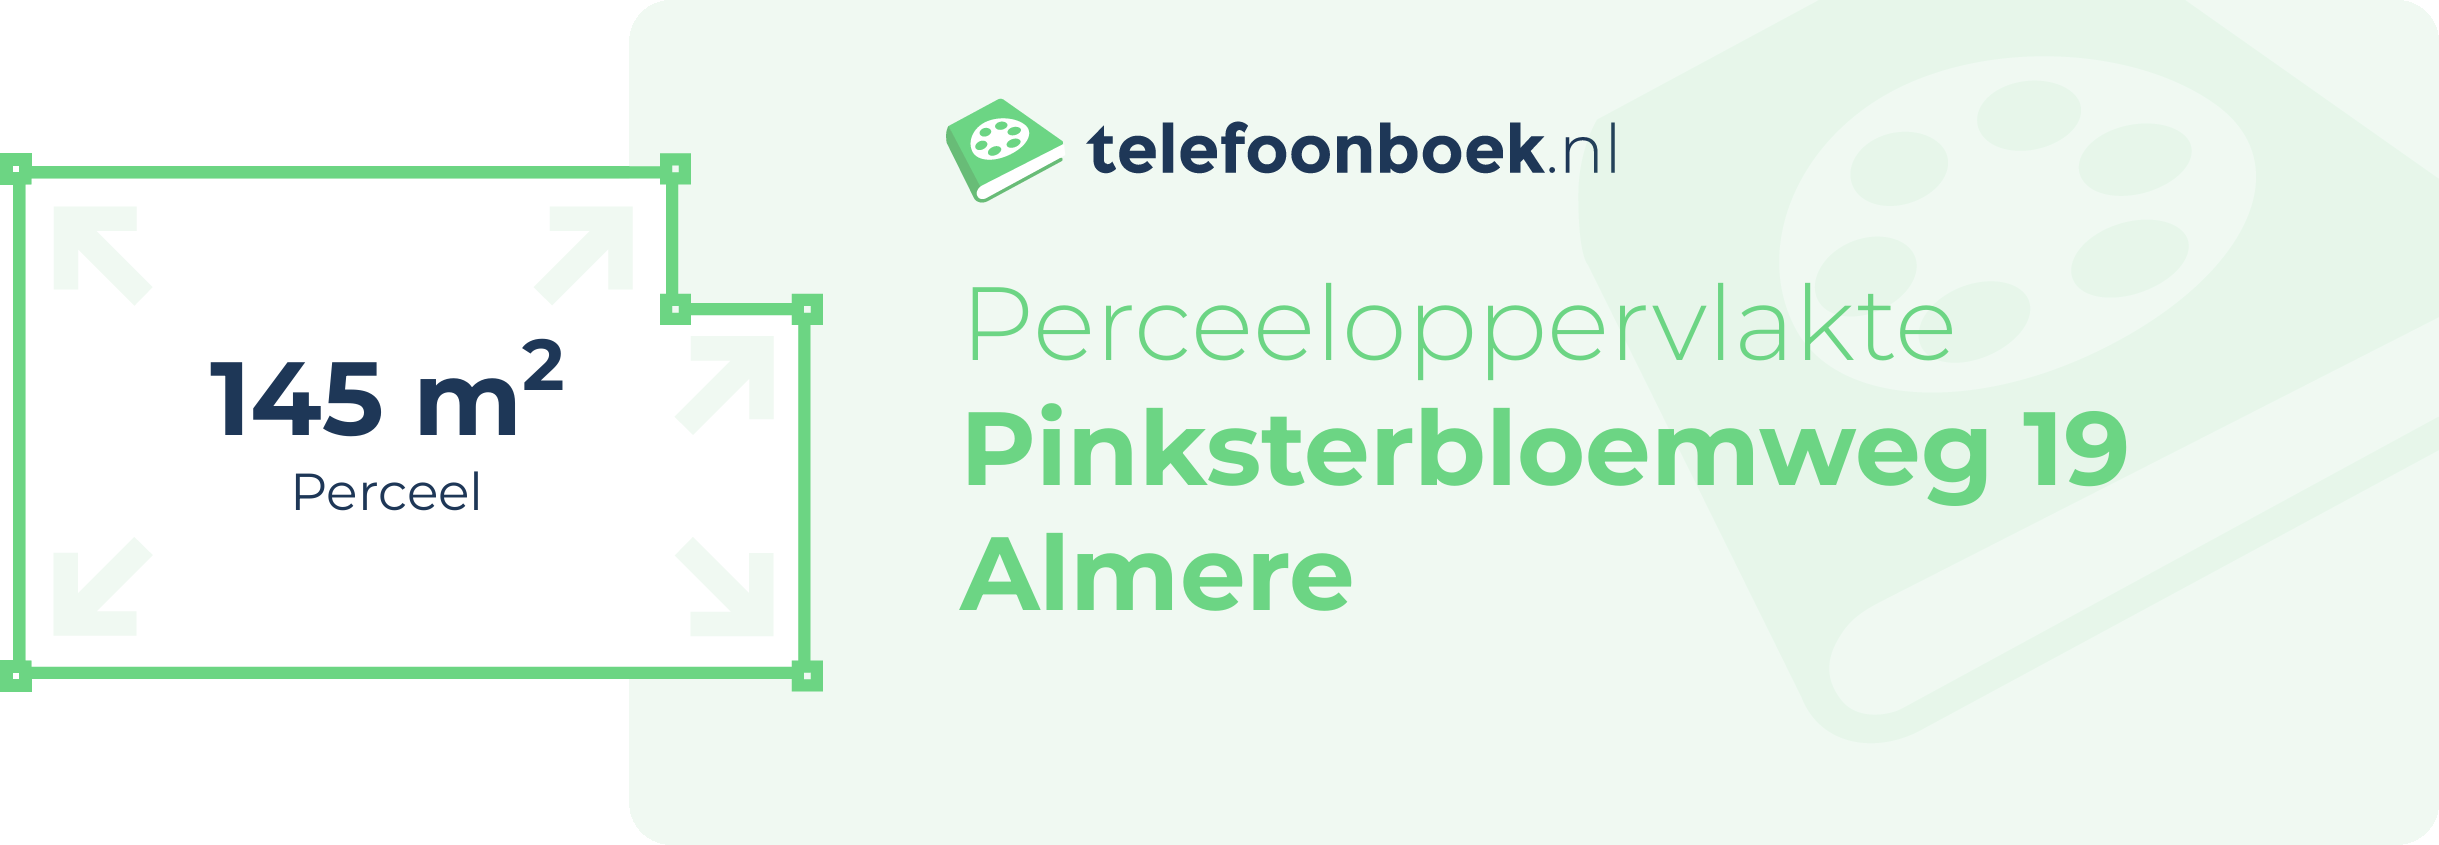 Perceeloppervlakte Pinksterbloemweg 19 Almere